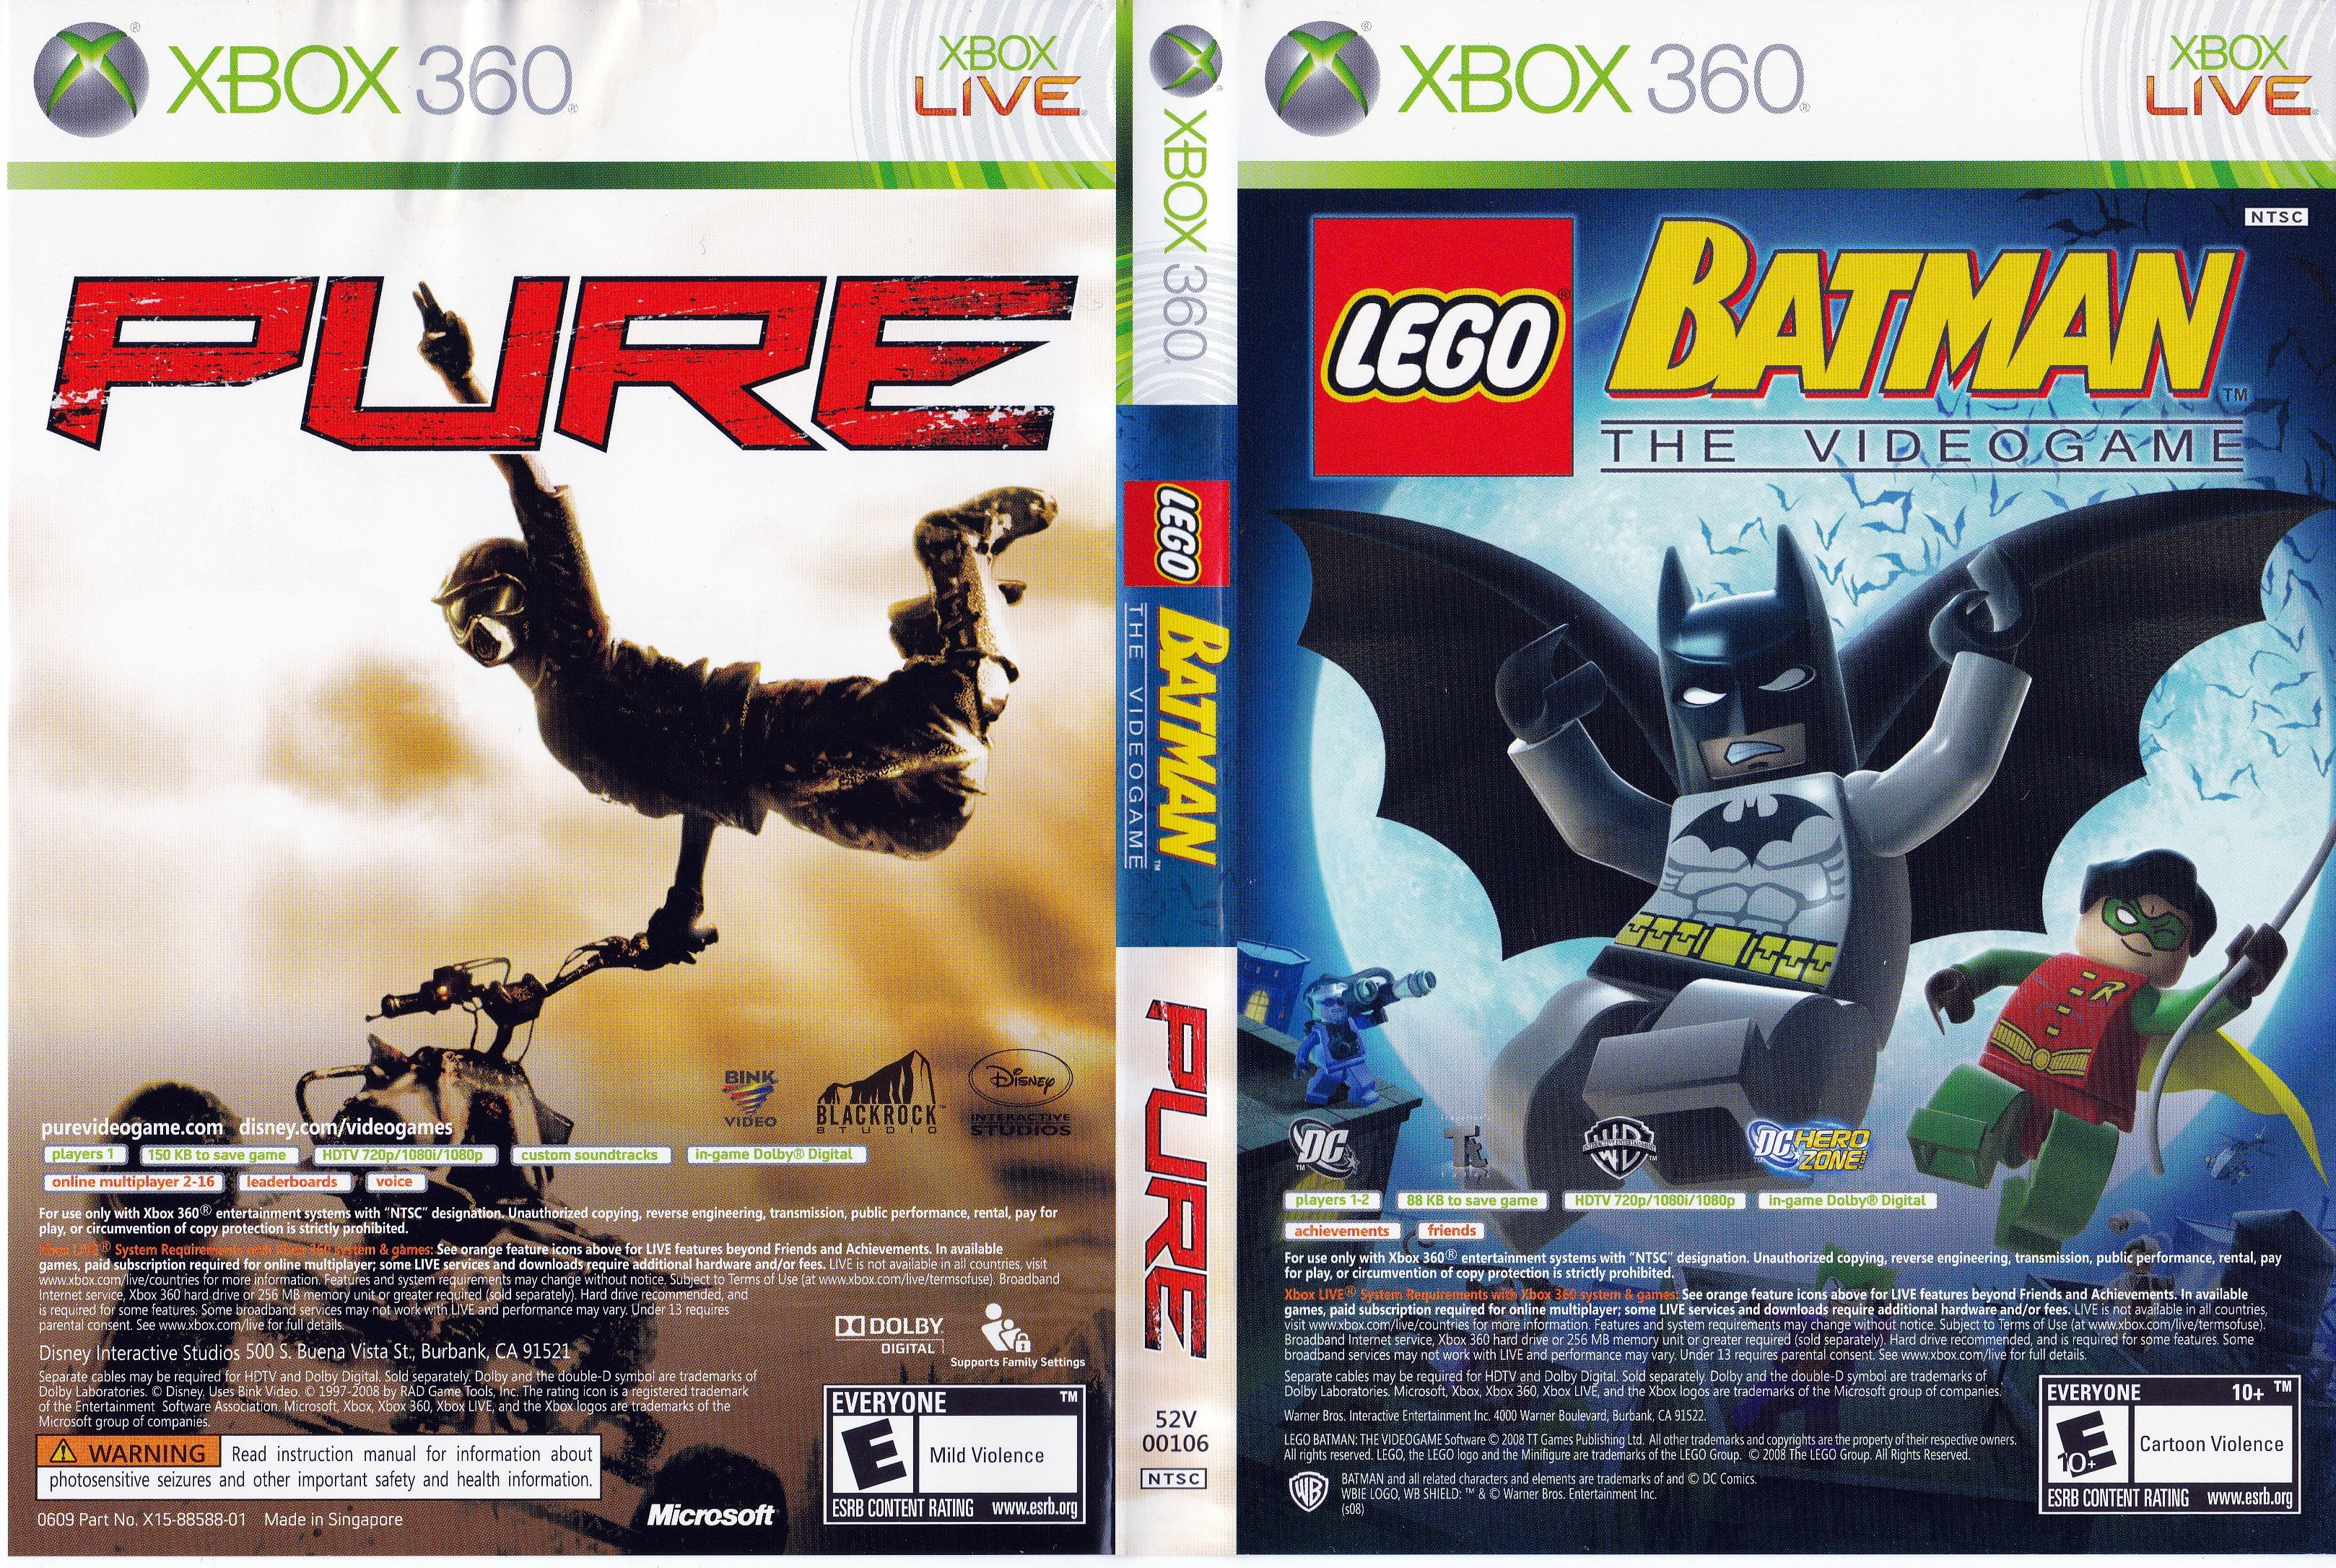 Lego Batman The Video Game / Pure - Xbox 360 (Refurbished ...